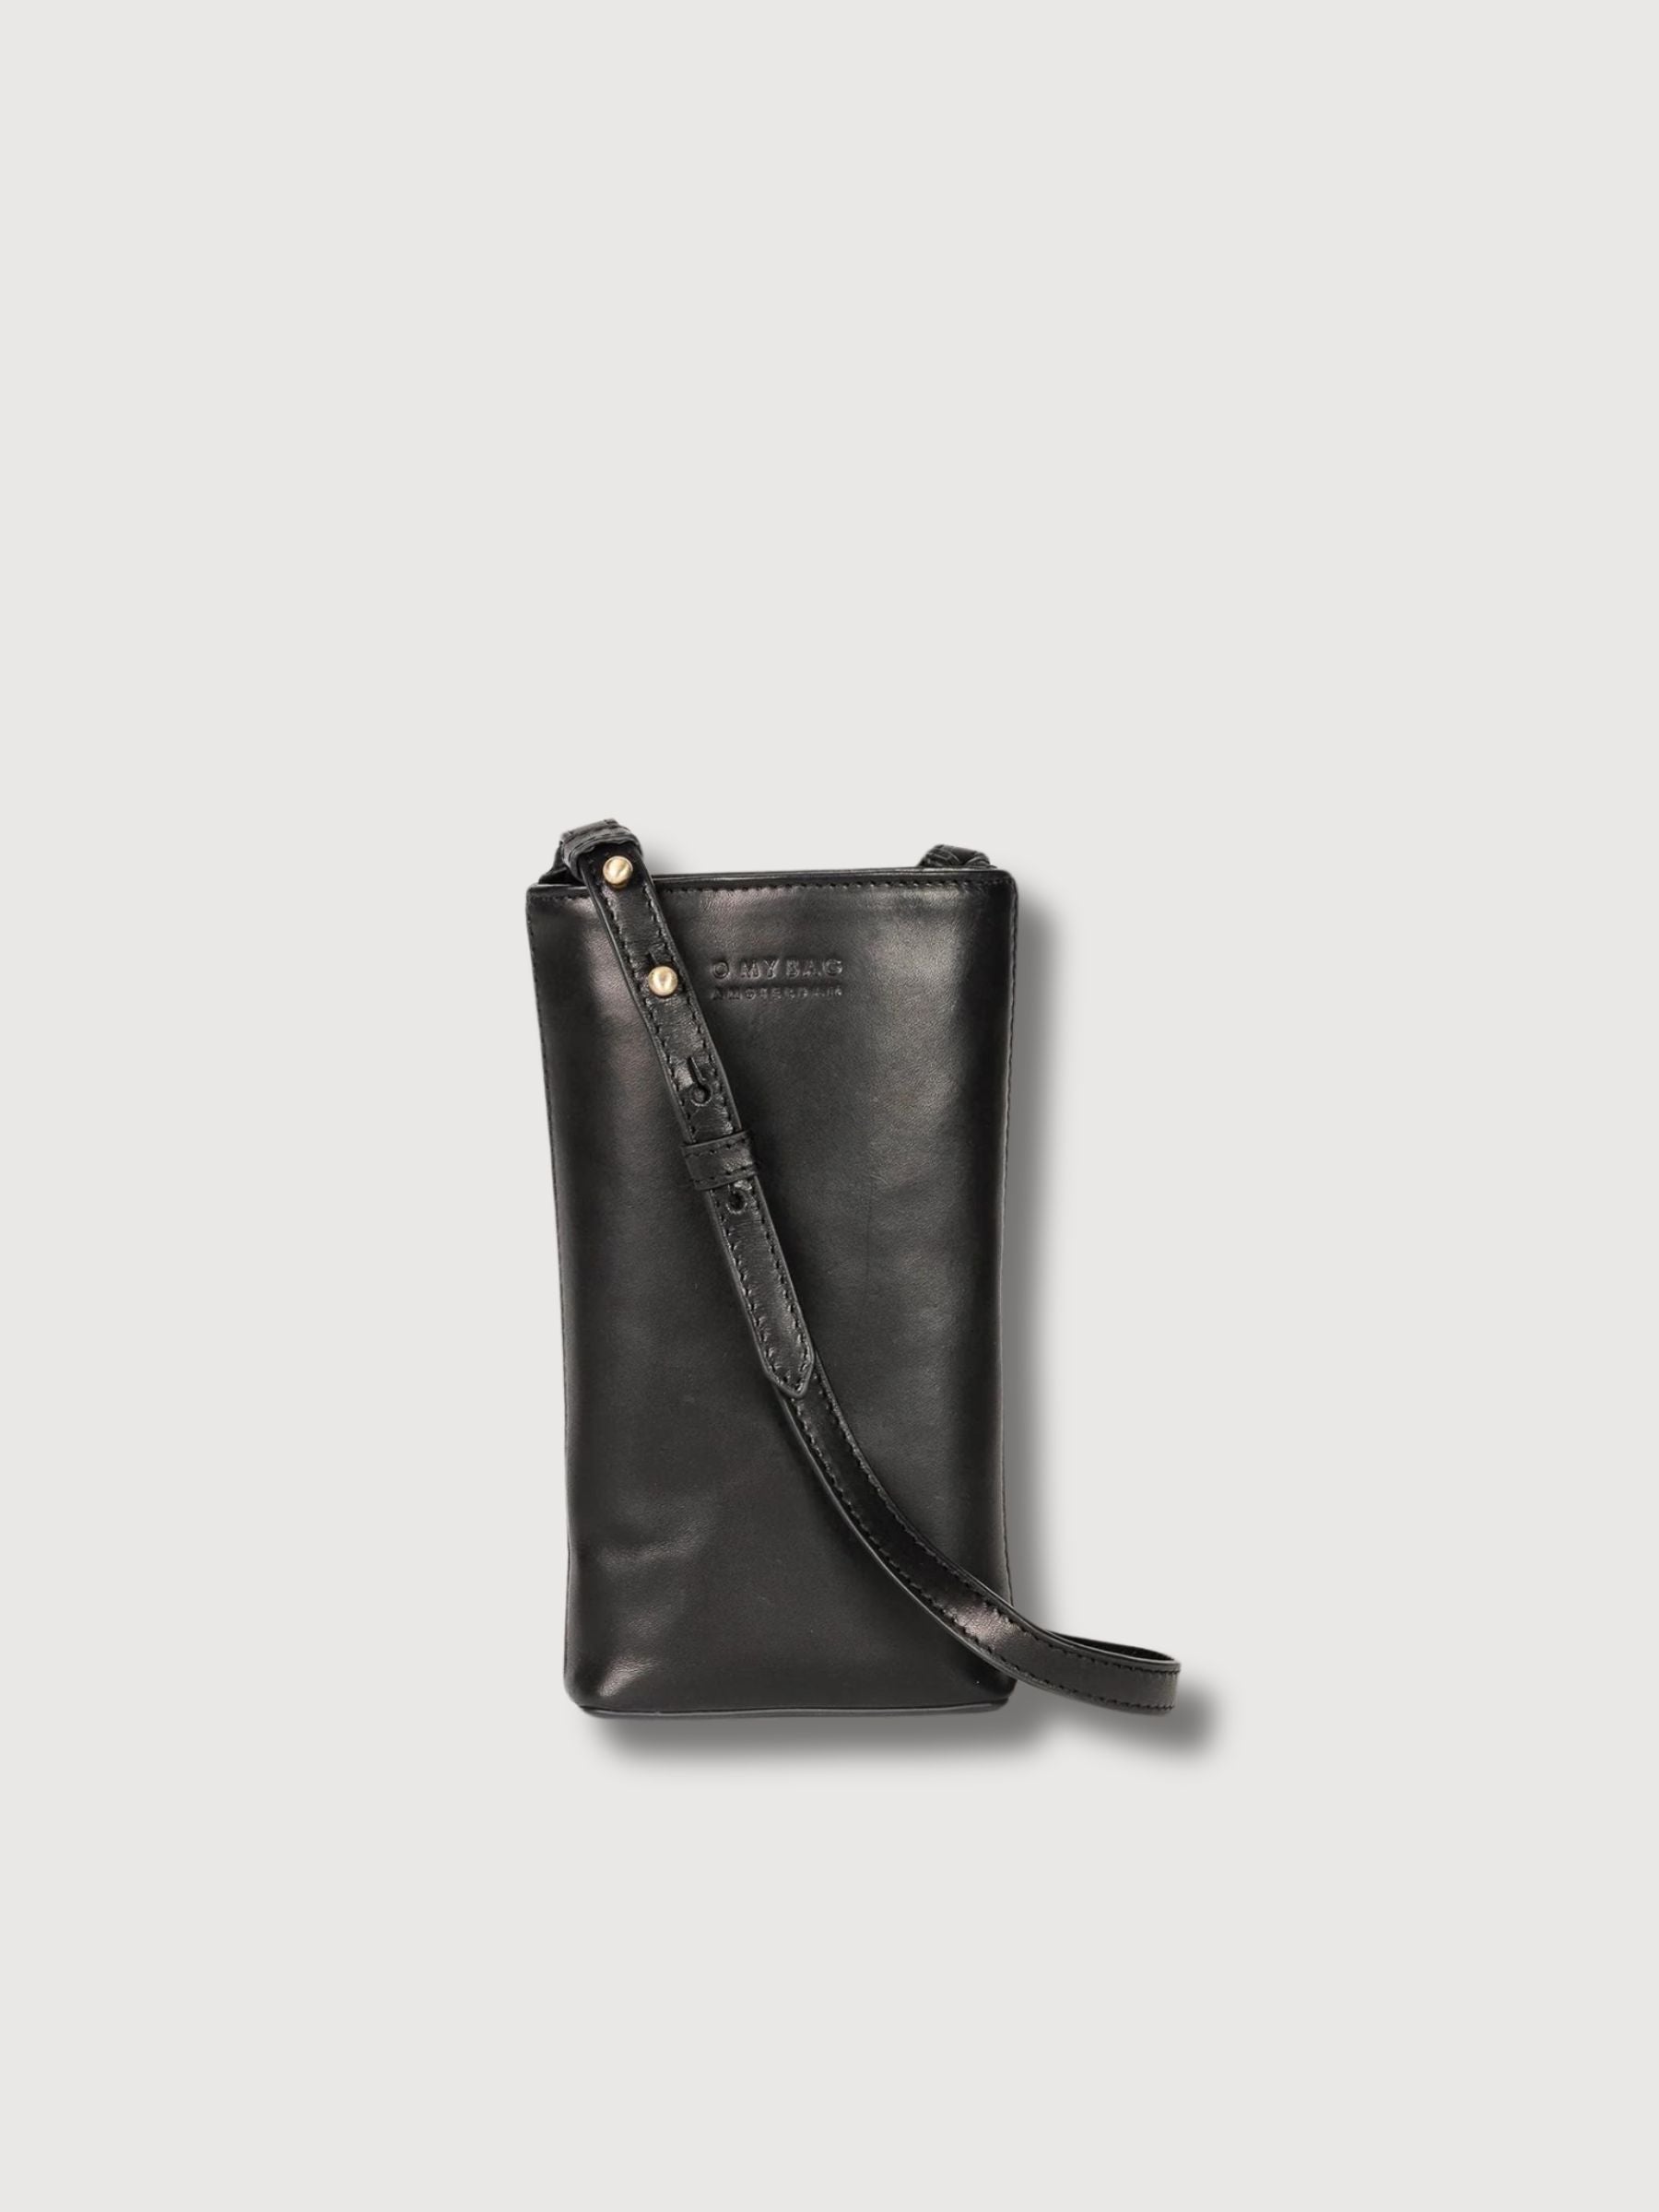 Phone Bag Charlie Leather Black | O My Bag